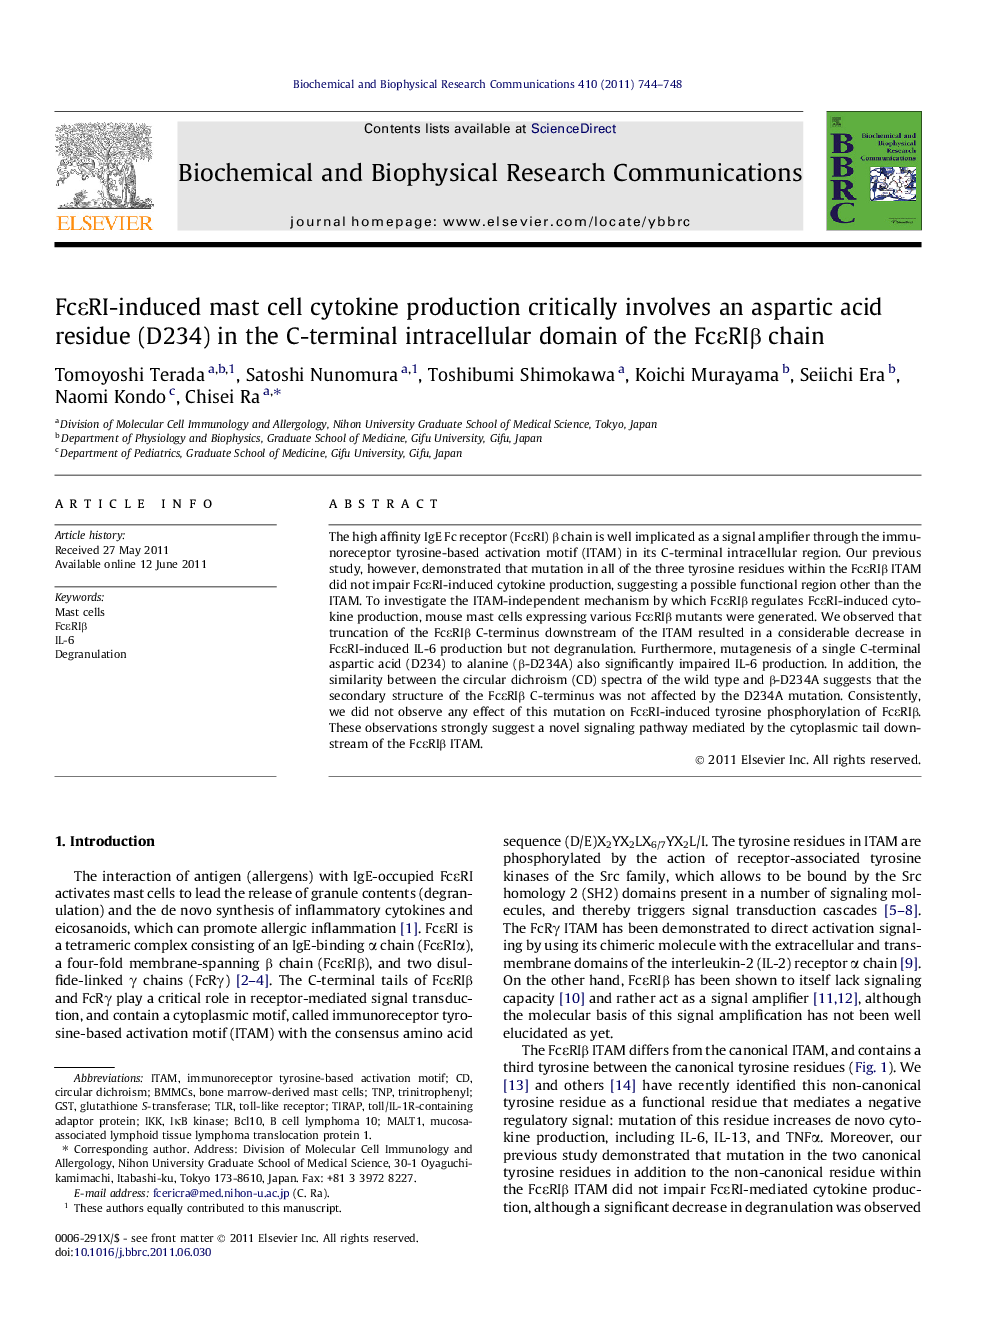 FcÎµRI-induced mast cell cytokine production critically involves an aspartic acid residue (D234) in the C-terminal intracellular domain of the FcÎµRIÎ² chain